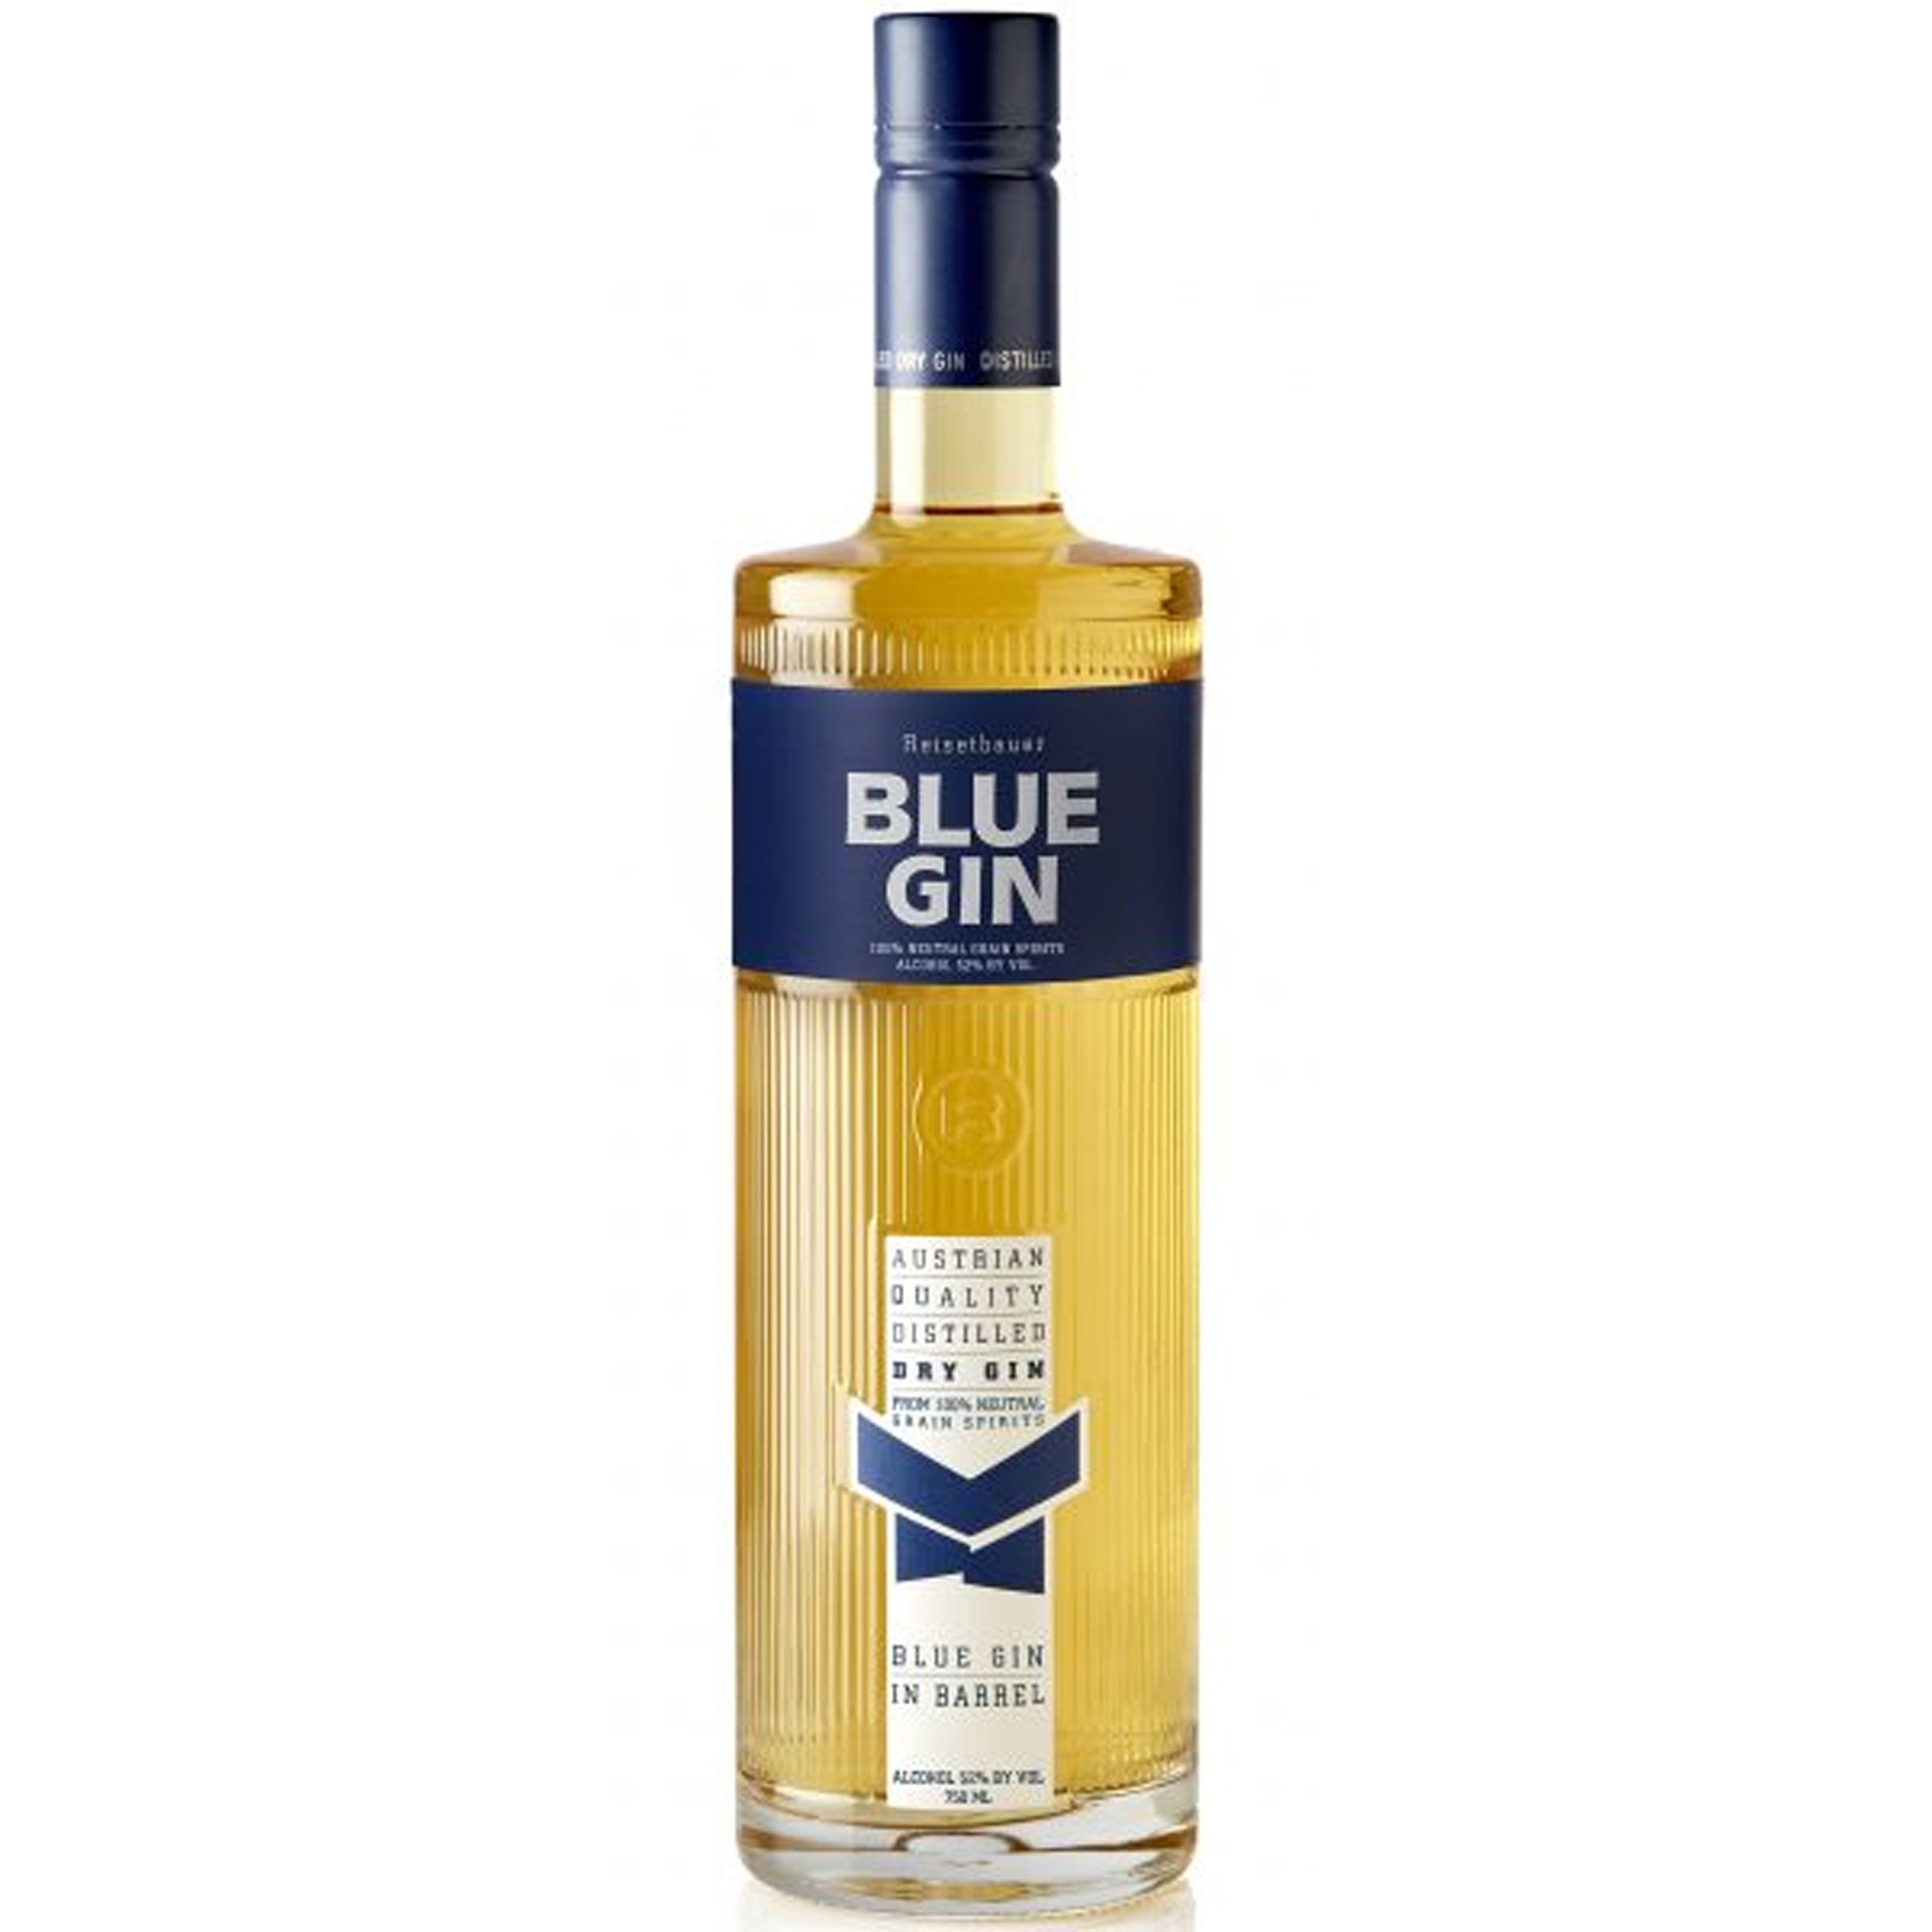 Hans Reisetbauer Blue Gin Chips Liquor Oak – in